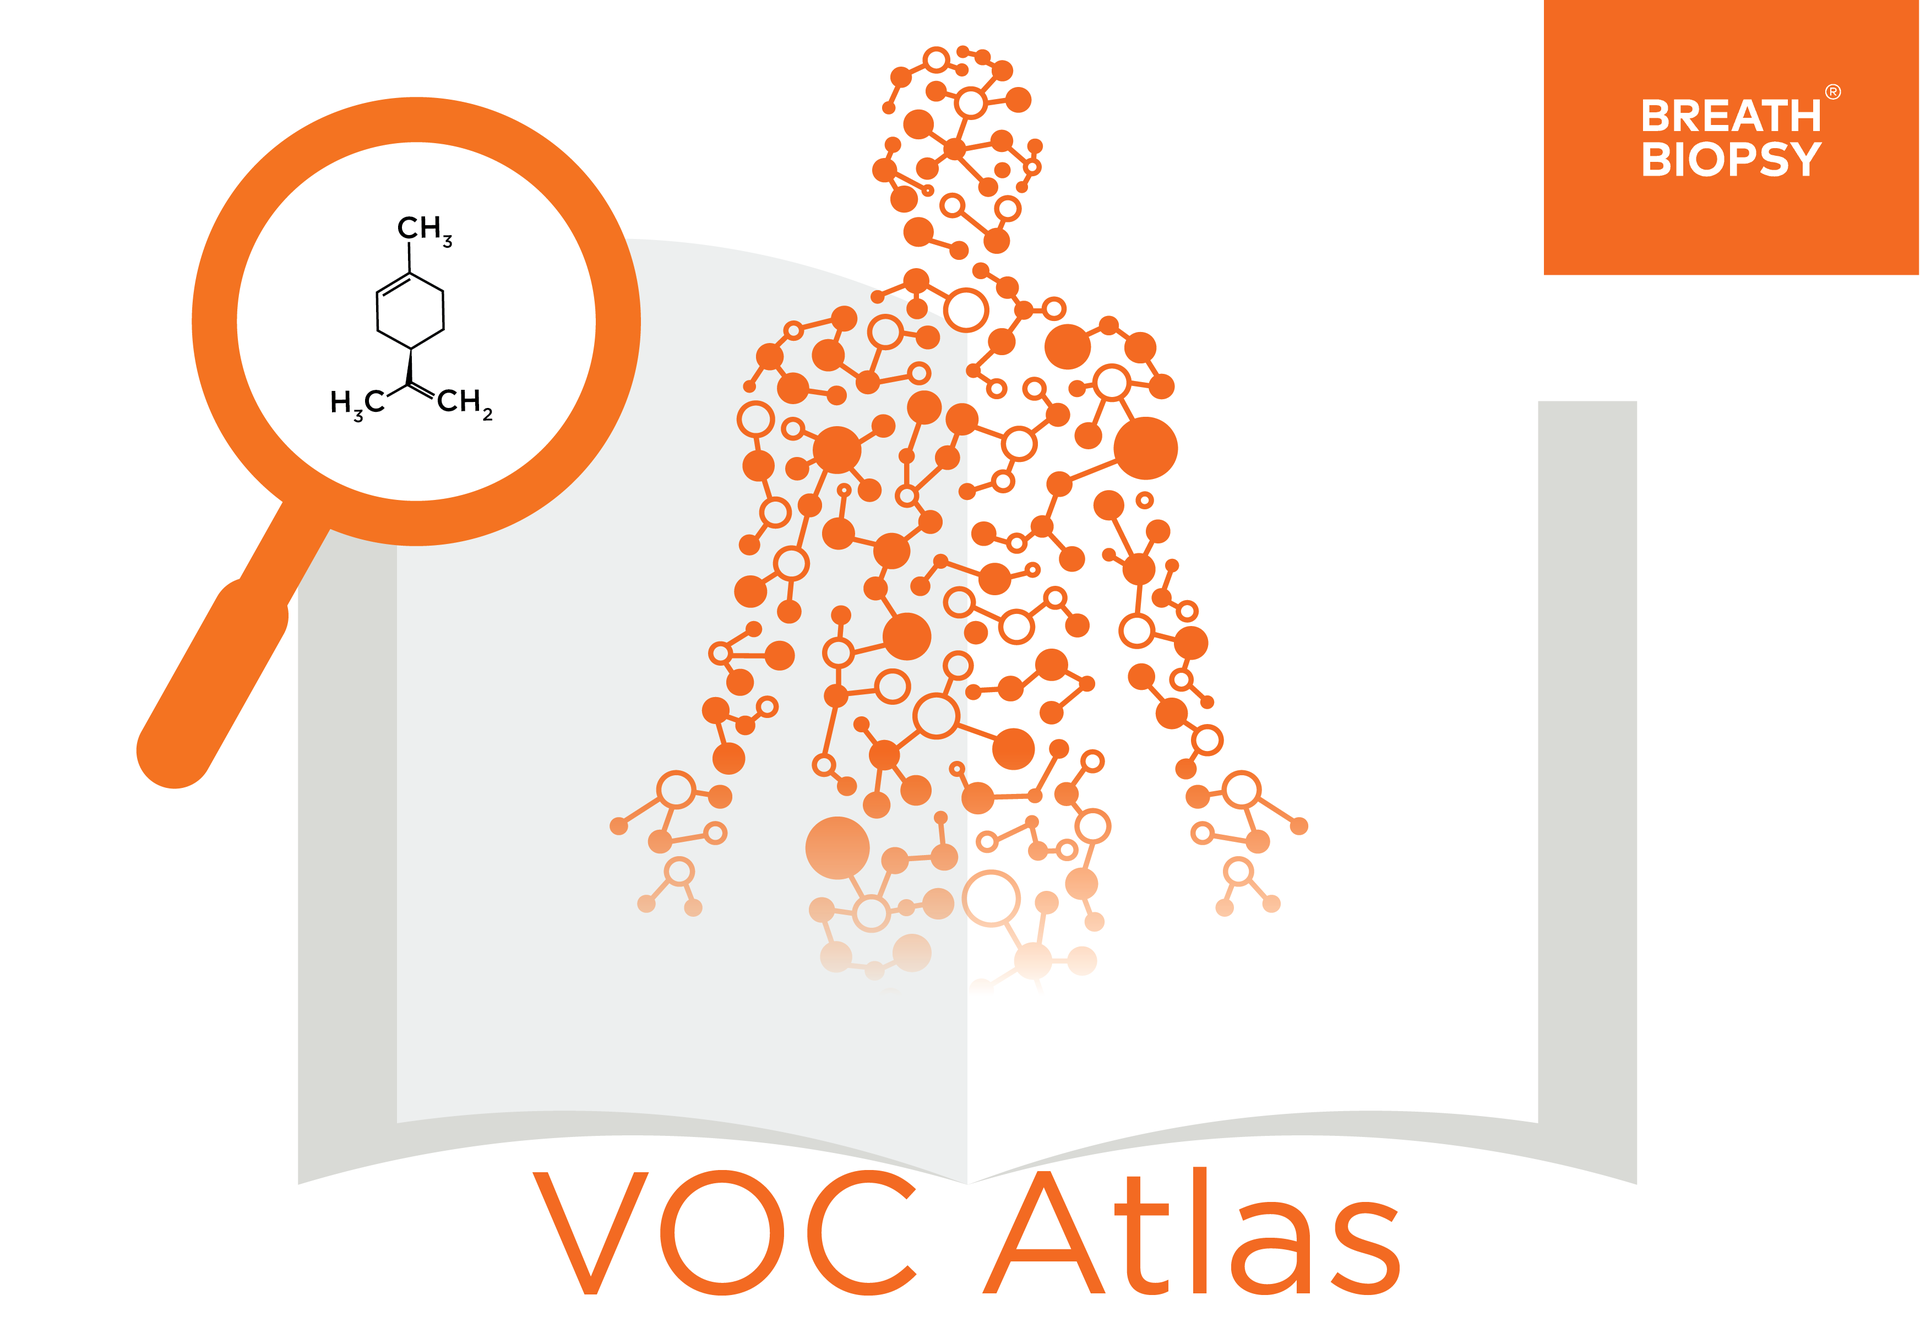 Introducing the Breath Biopsy VOC Atlas